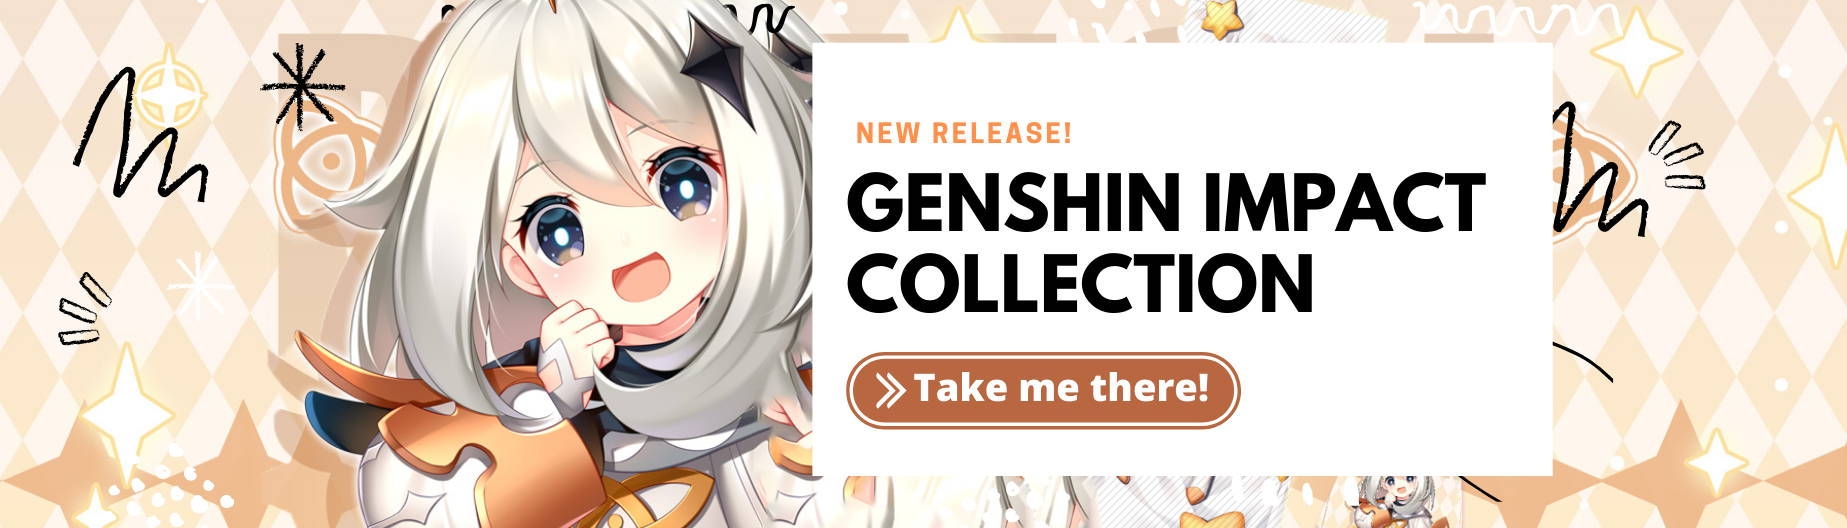 Genshin Impact Merchandise Collection